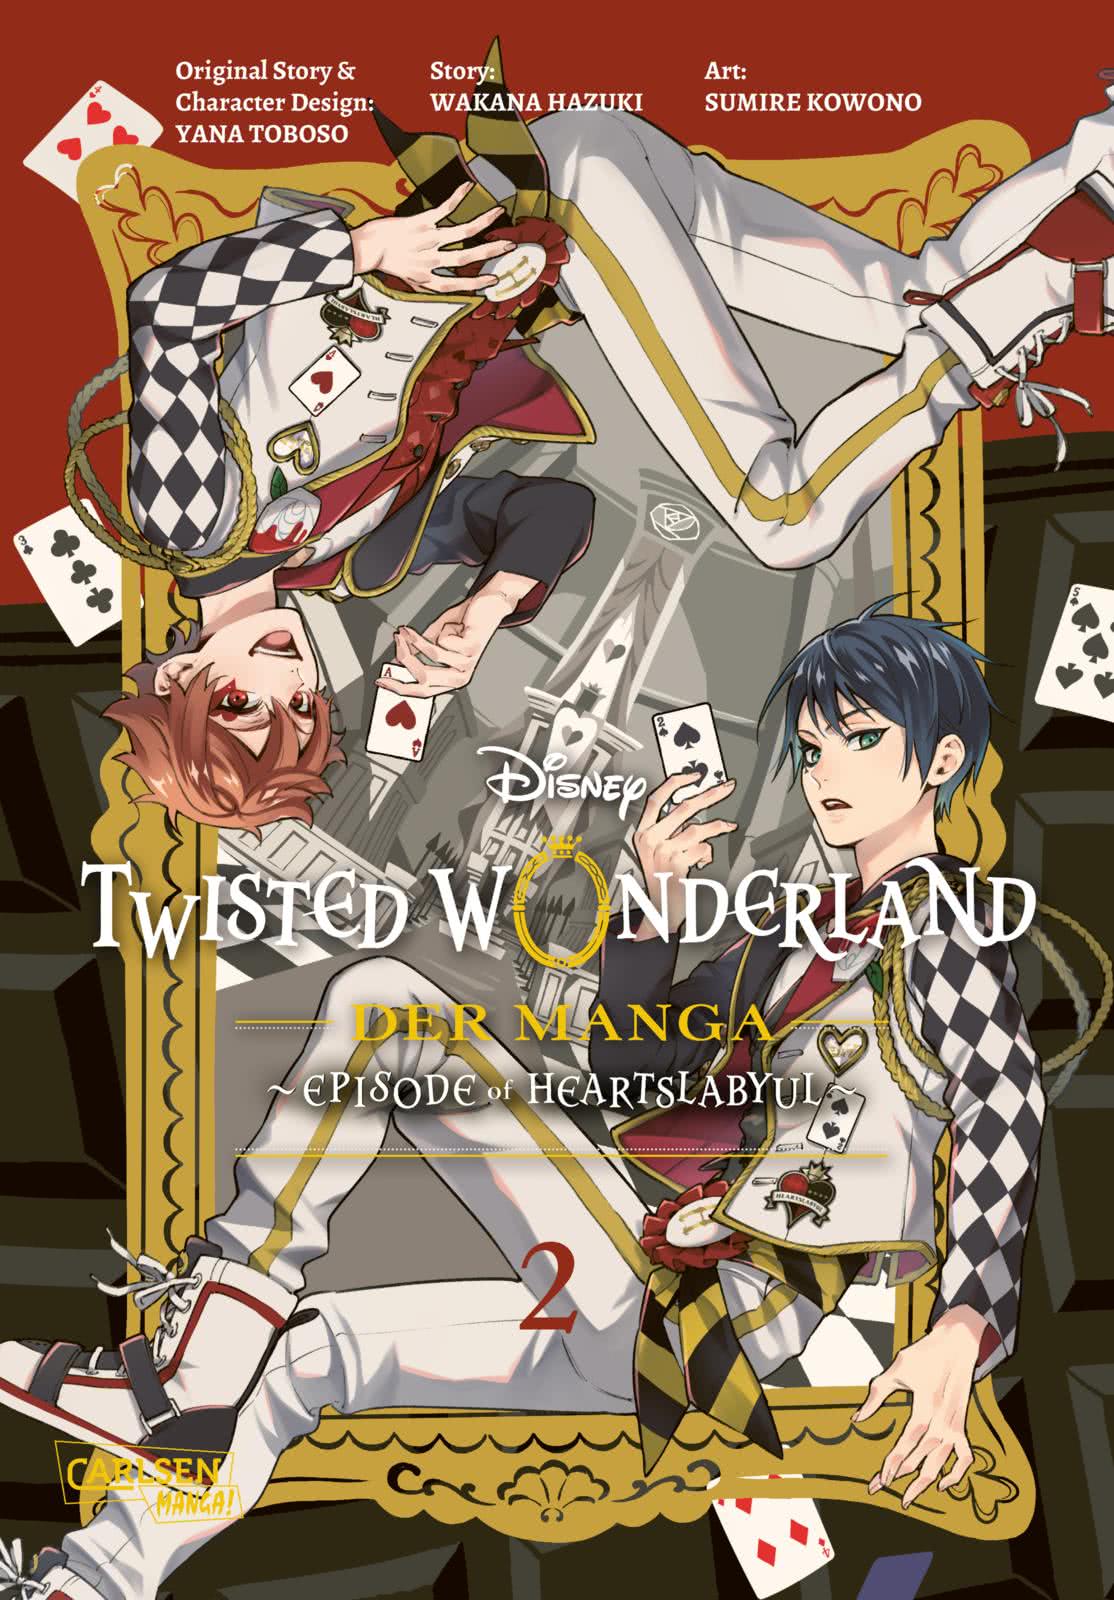 Disney Twisted Wonderland -The Comic - Episode of Heartslabyul Vol.4 -  ISBN:9784757583269